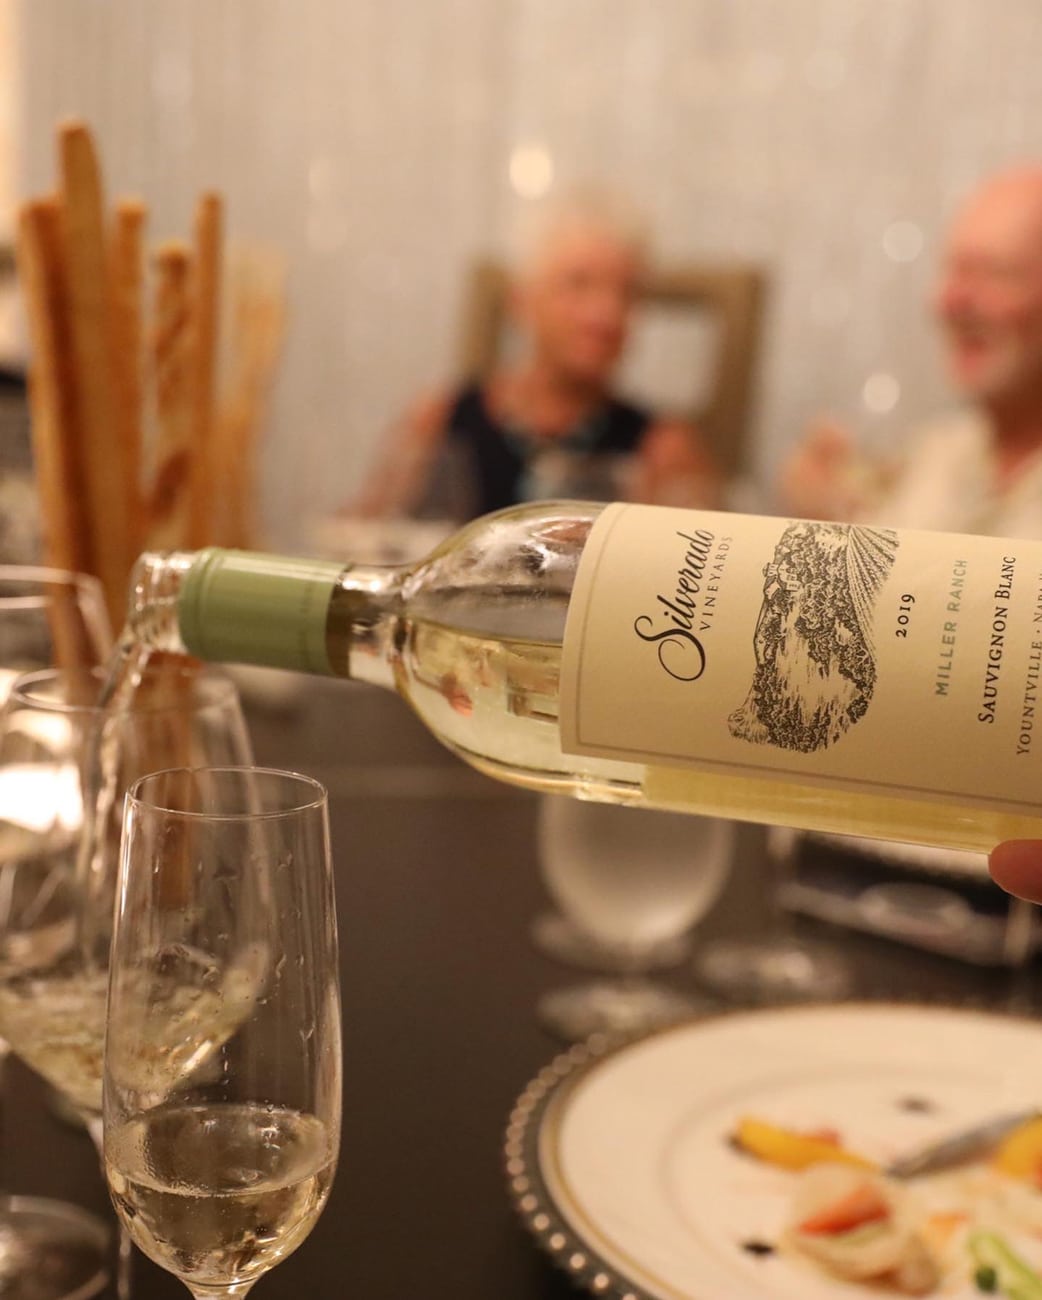 Silverado Vineyards 2019 Sauvignon Blanc